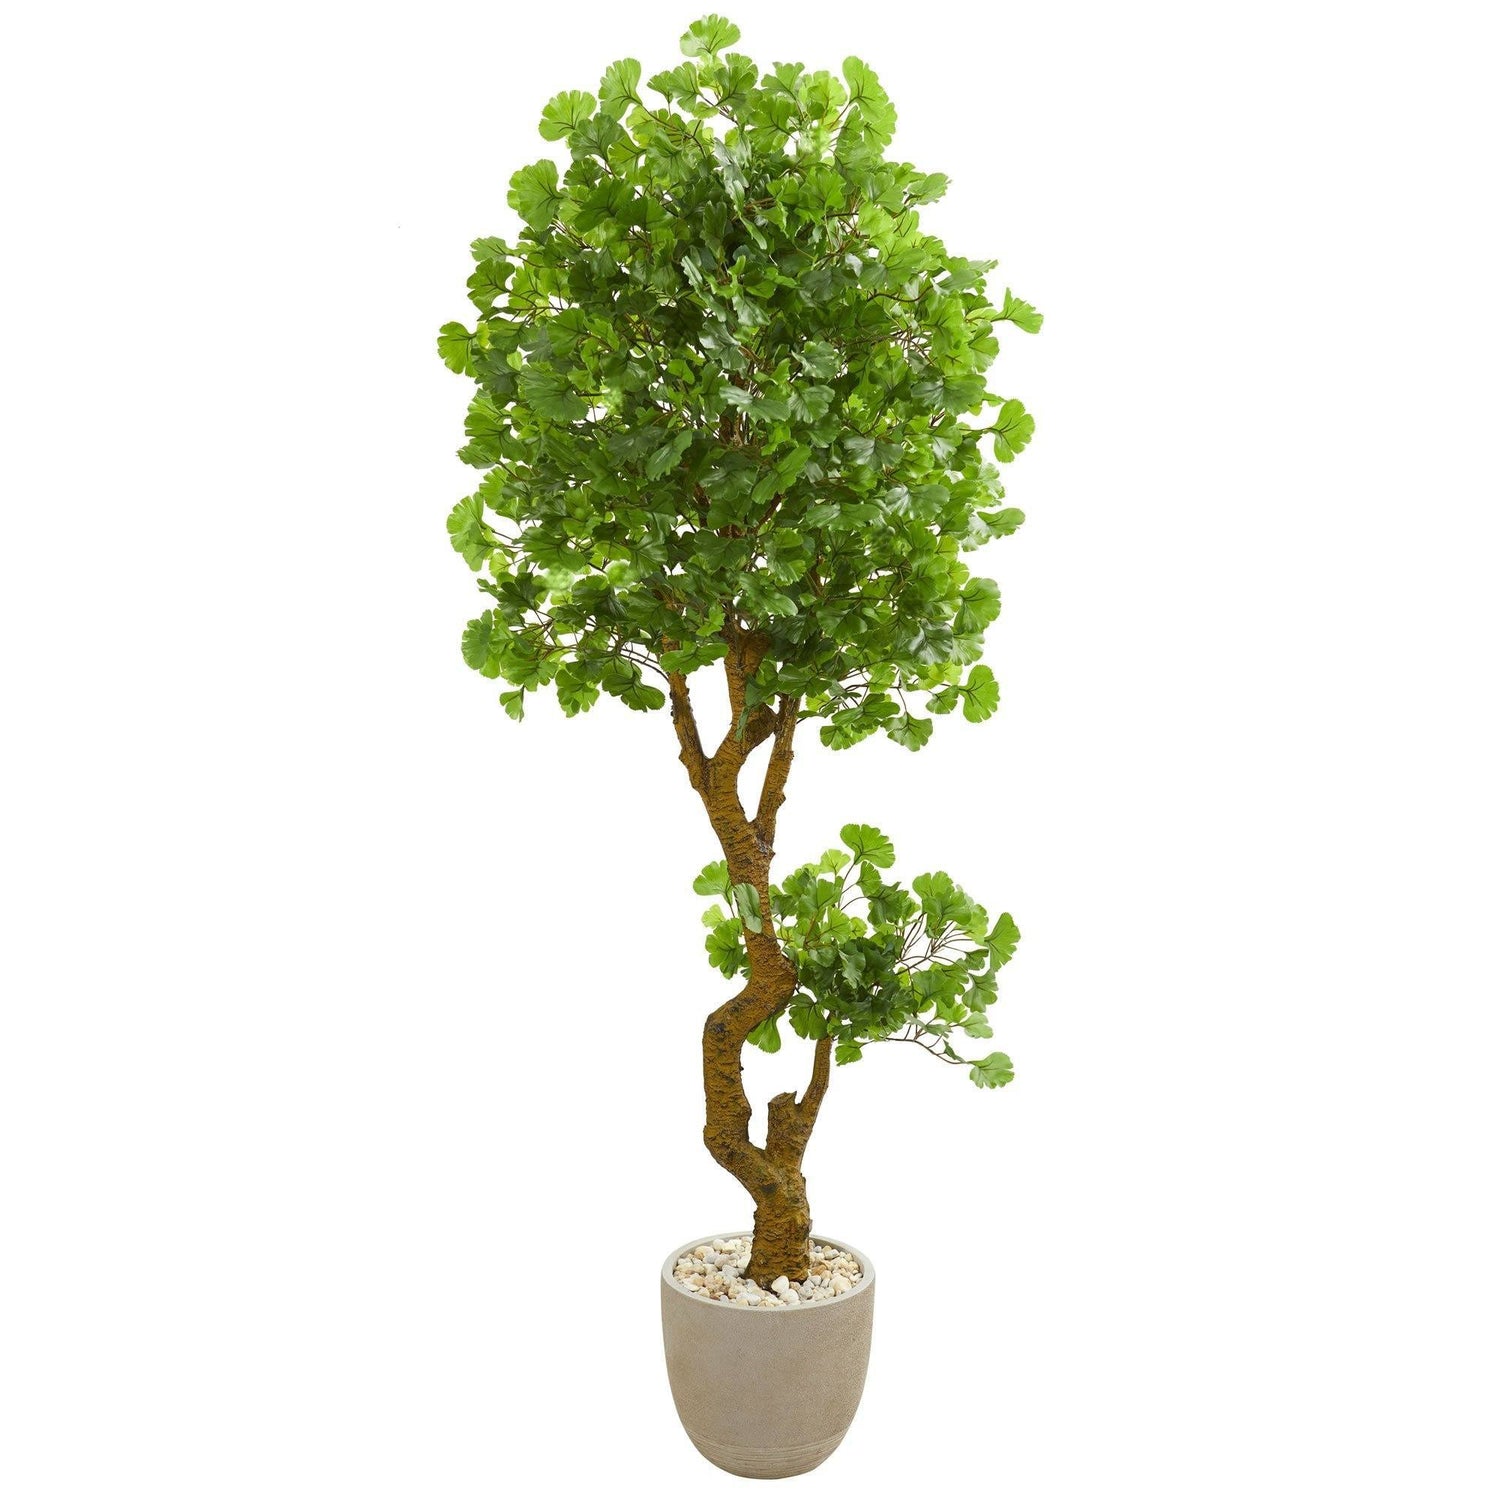 6.5’ Jingo Artificial Tree in Sand Colored Planter (Indoor/Outdoor)